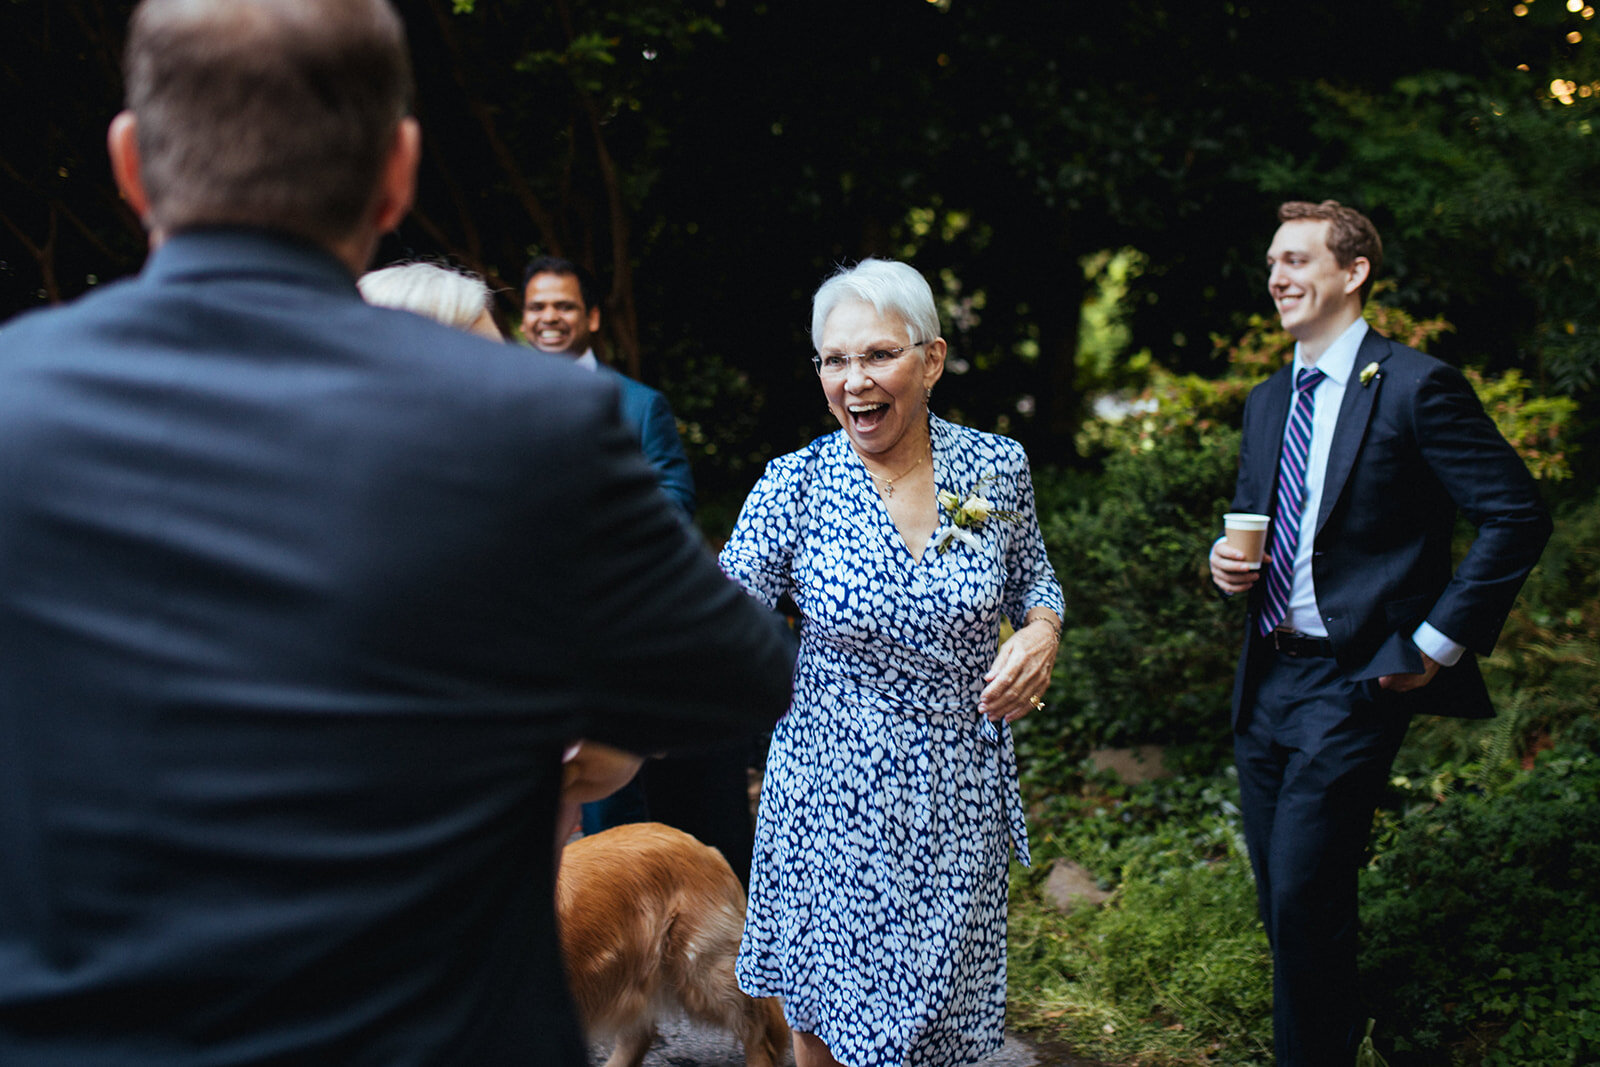 Guests mingling at backyard reception in Atlanta GA Shawnee Custalow Queer Wedding Photographer